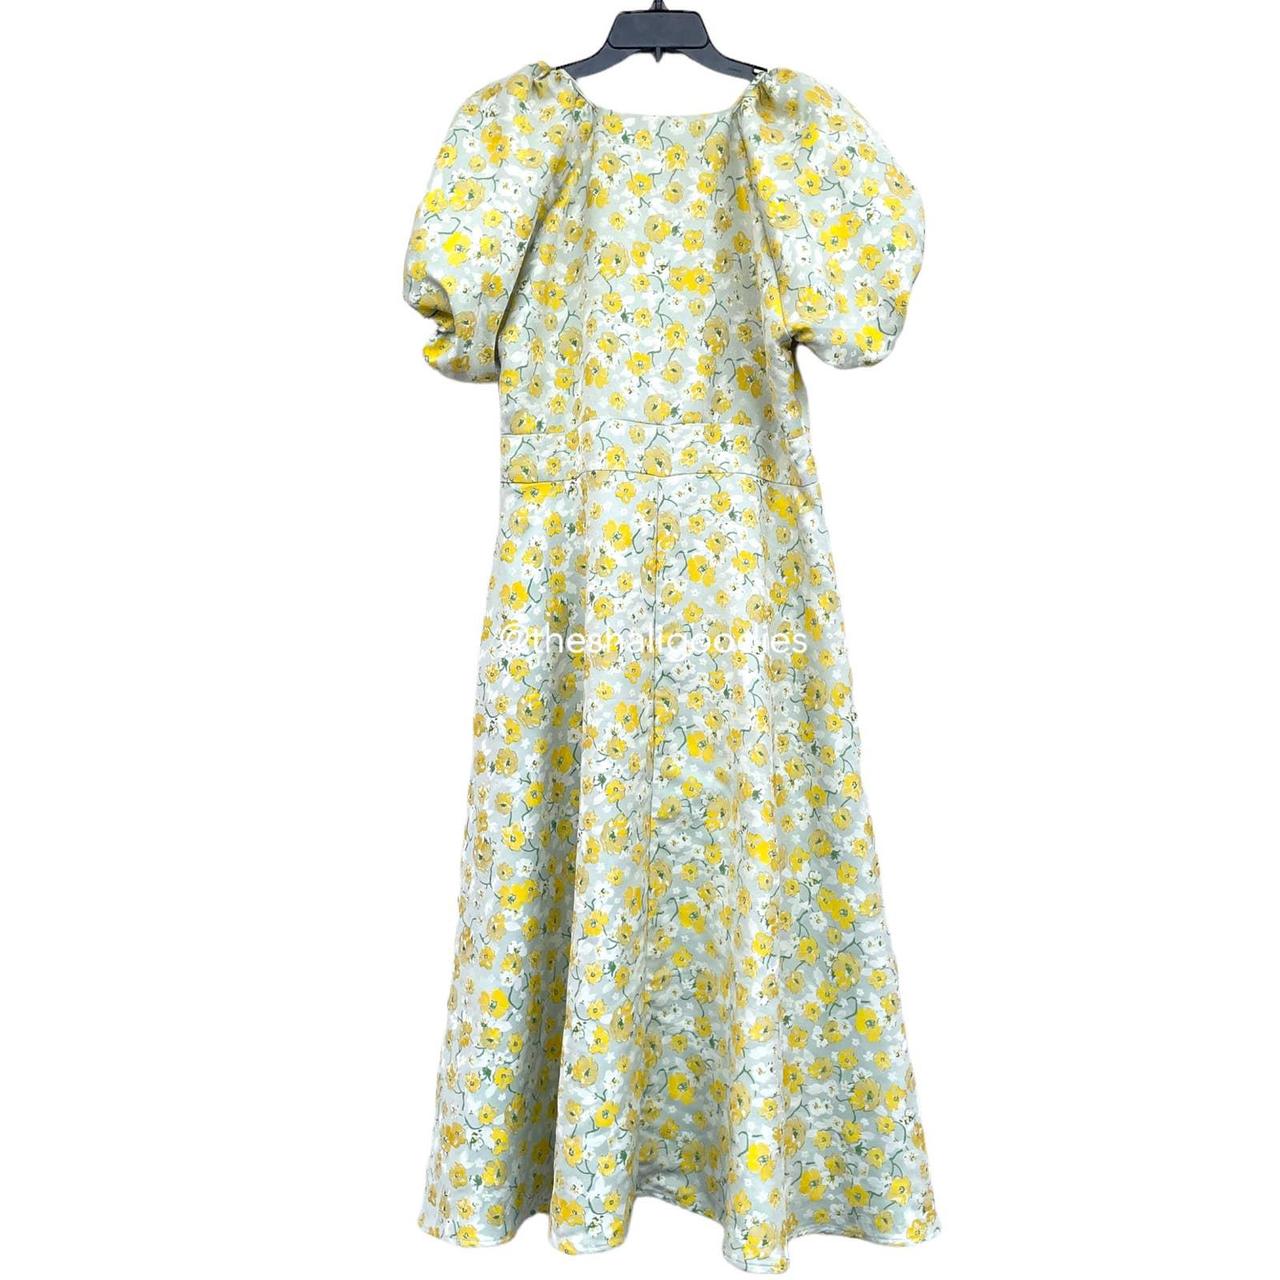 Product Image 2 - DREAM SISTER JANE Dress

**Actual color